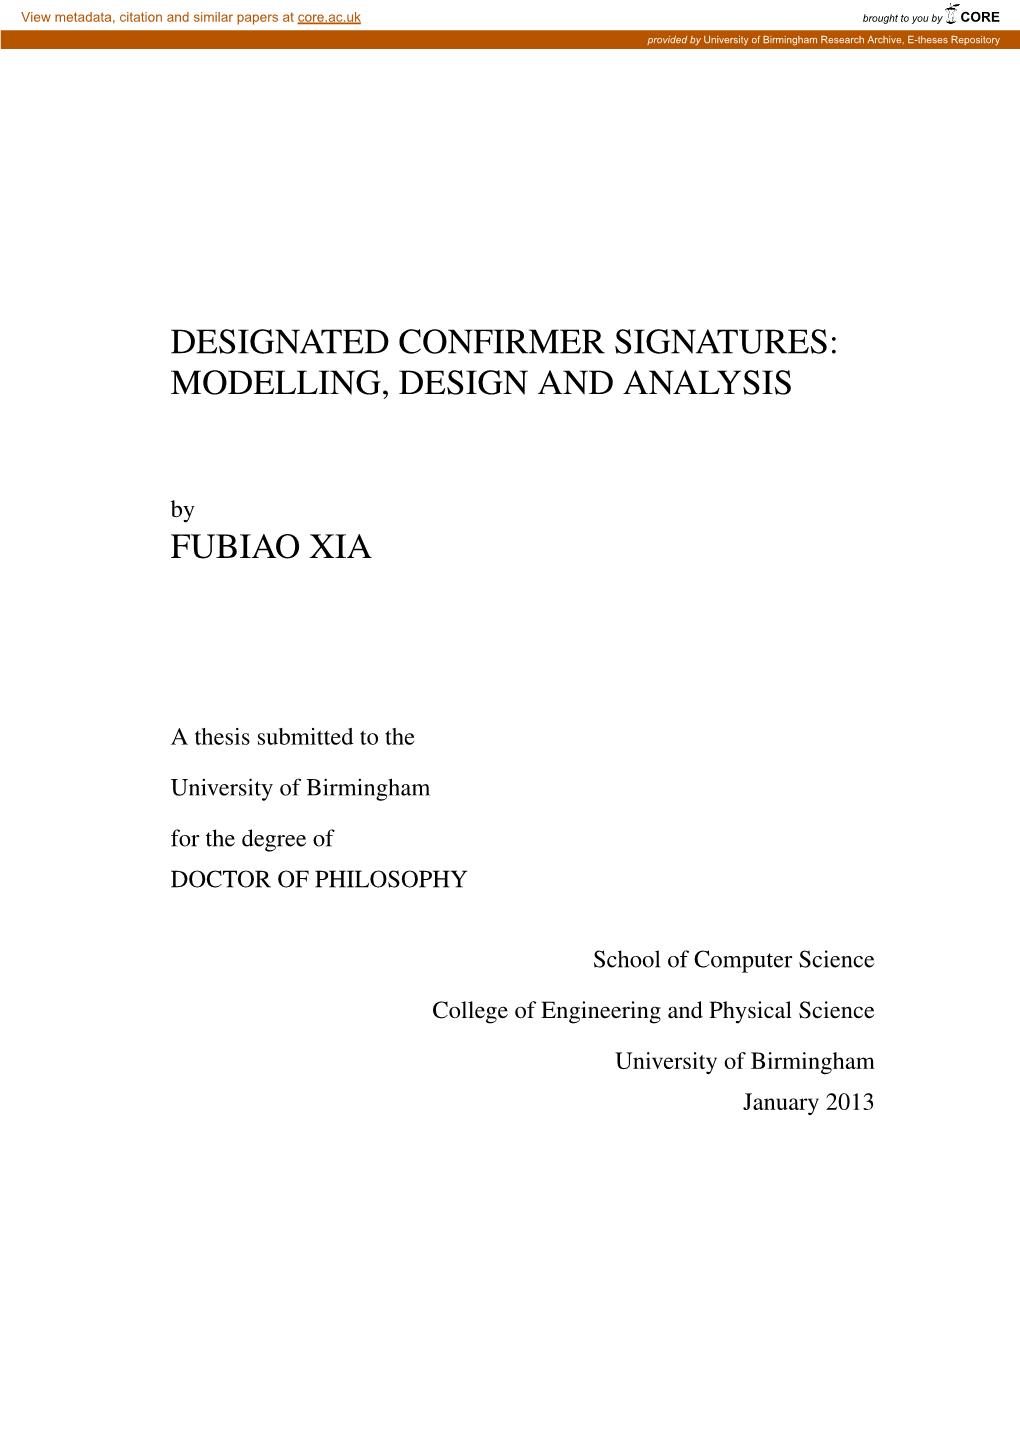 Designated Confirmer Signatures: Modelling, Design and Analysis